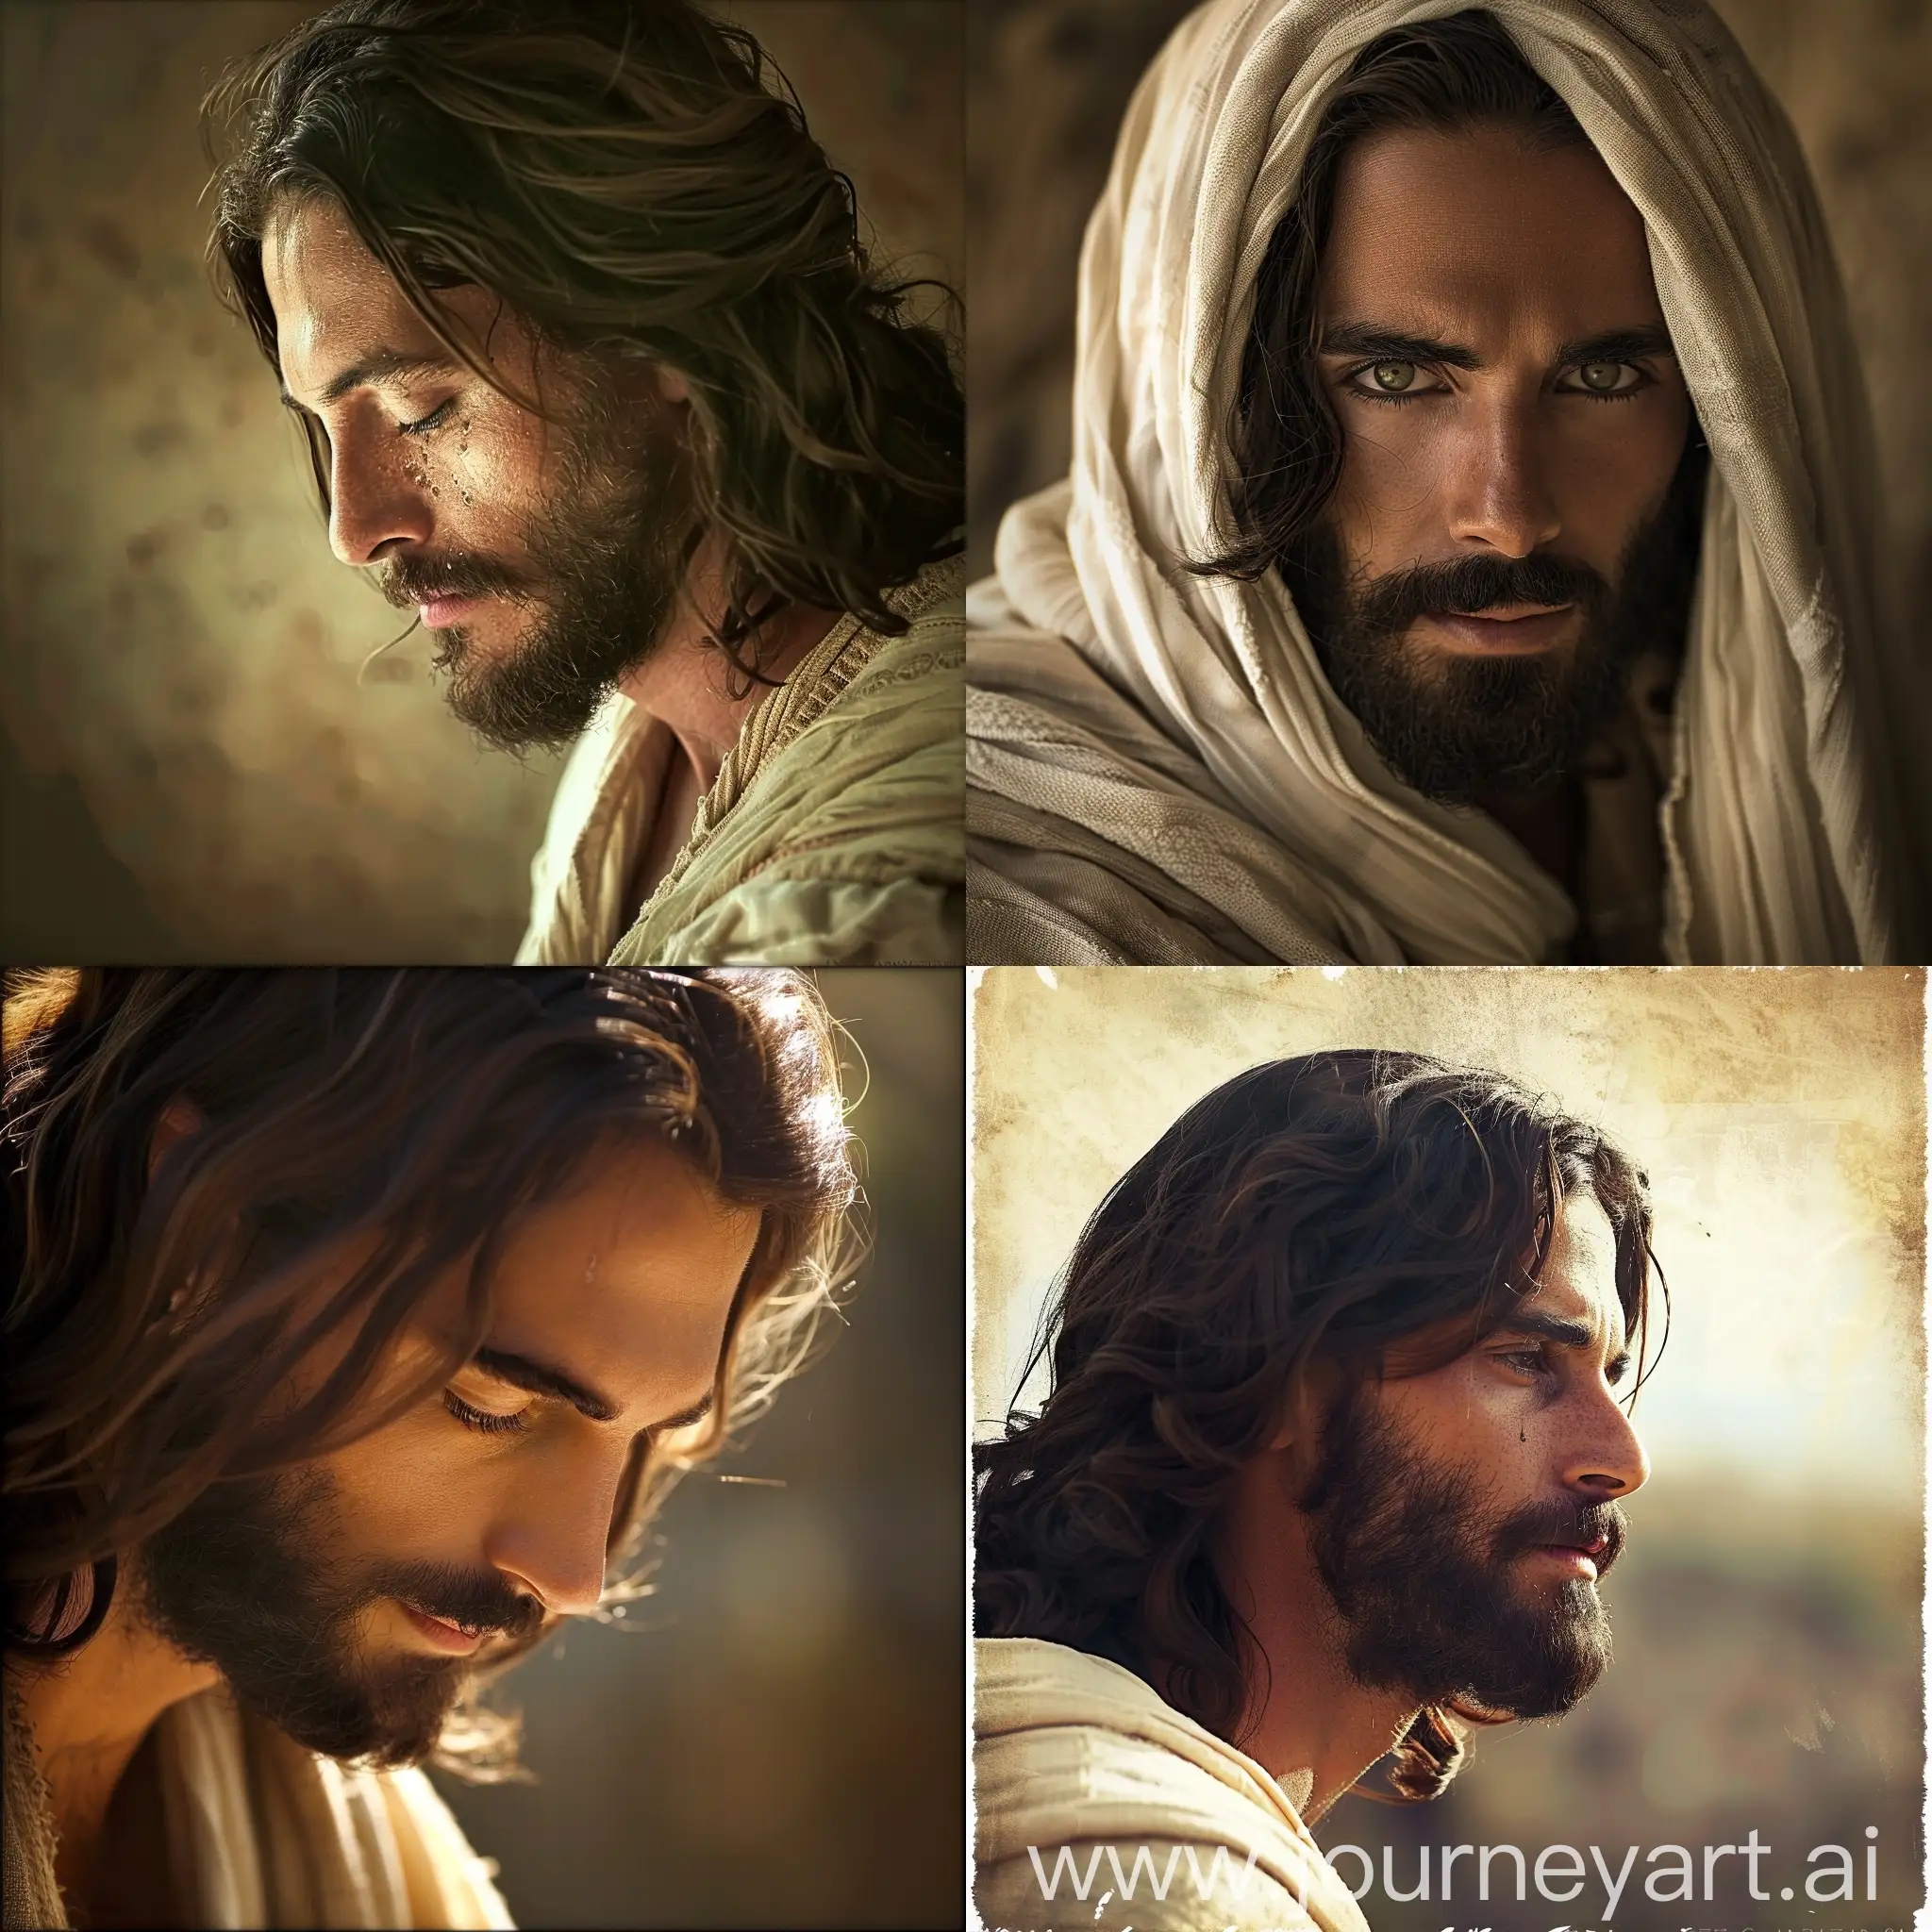 A beautiful image of Jesus with a serene gaze